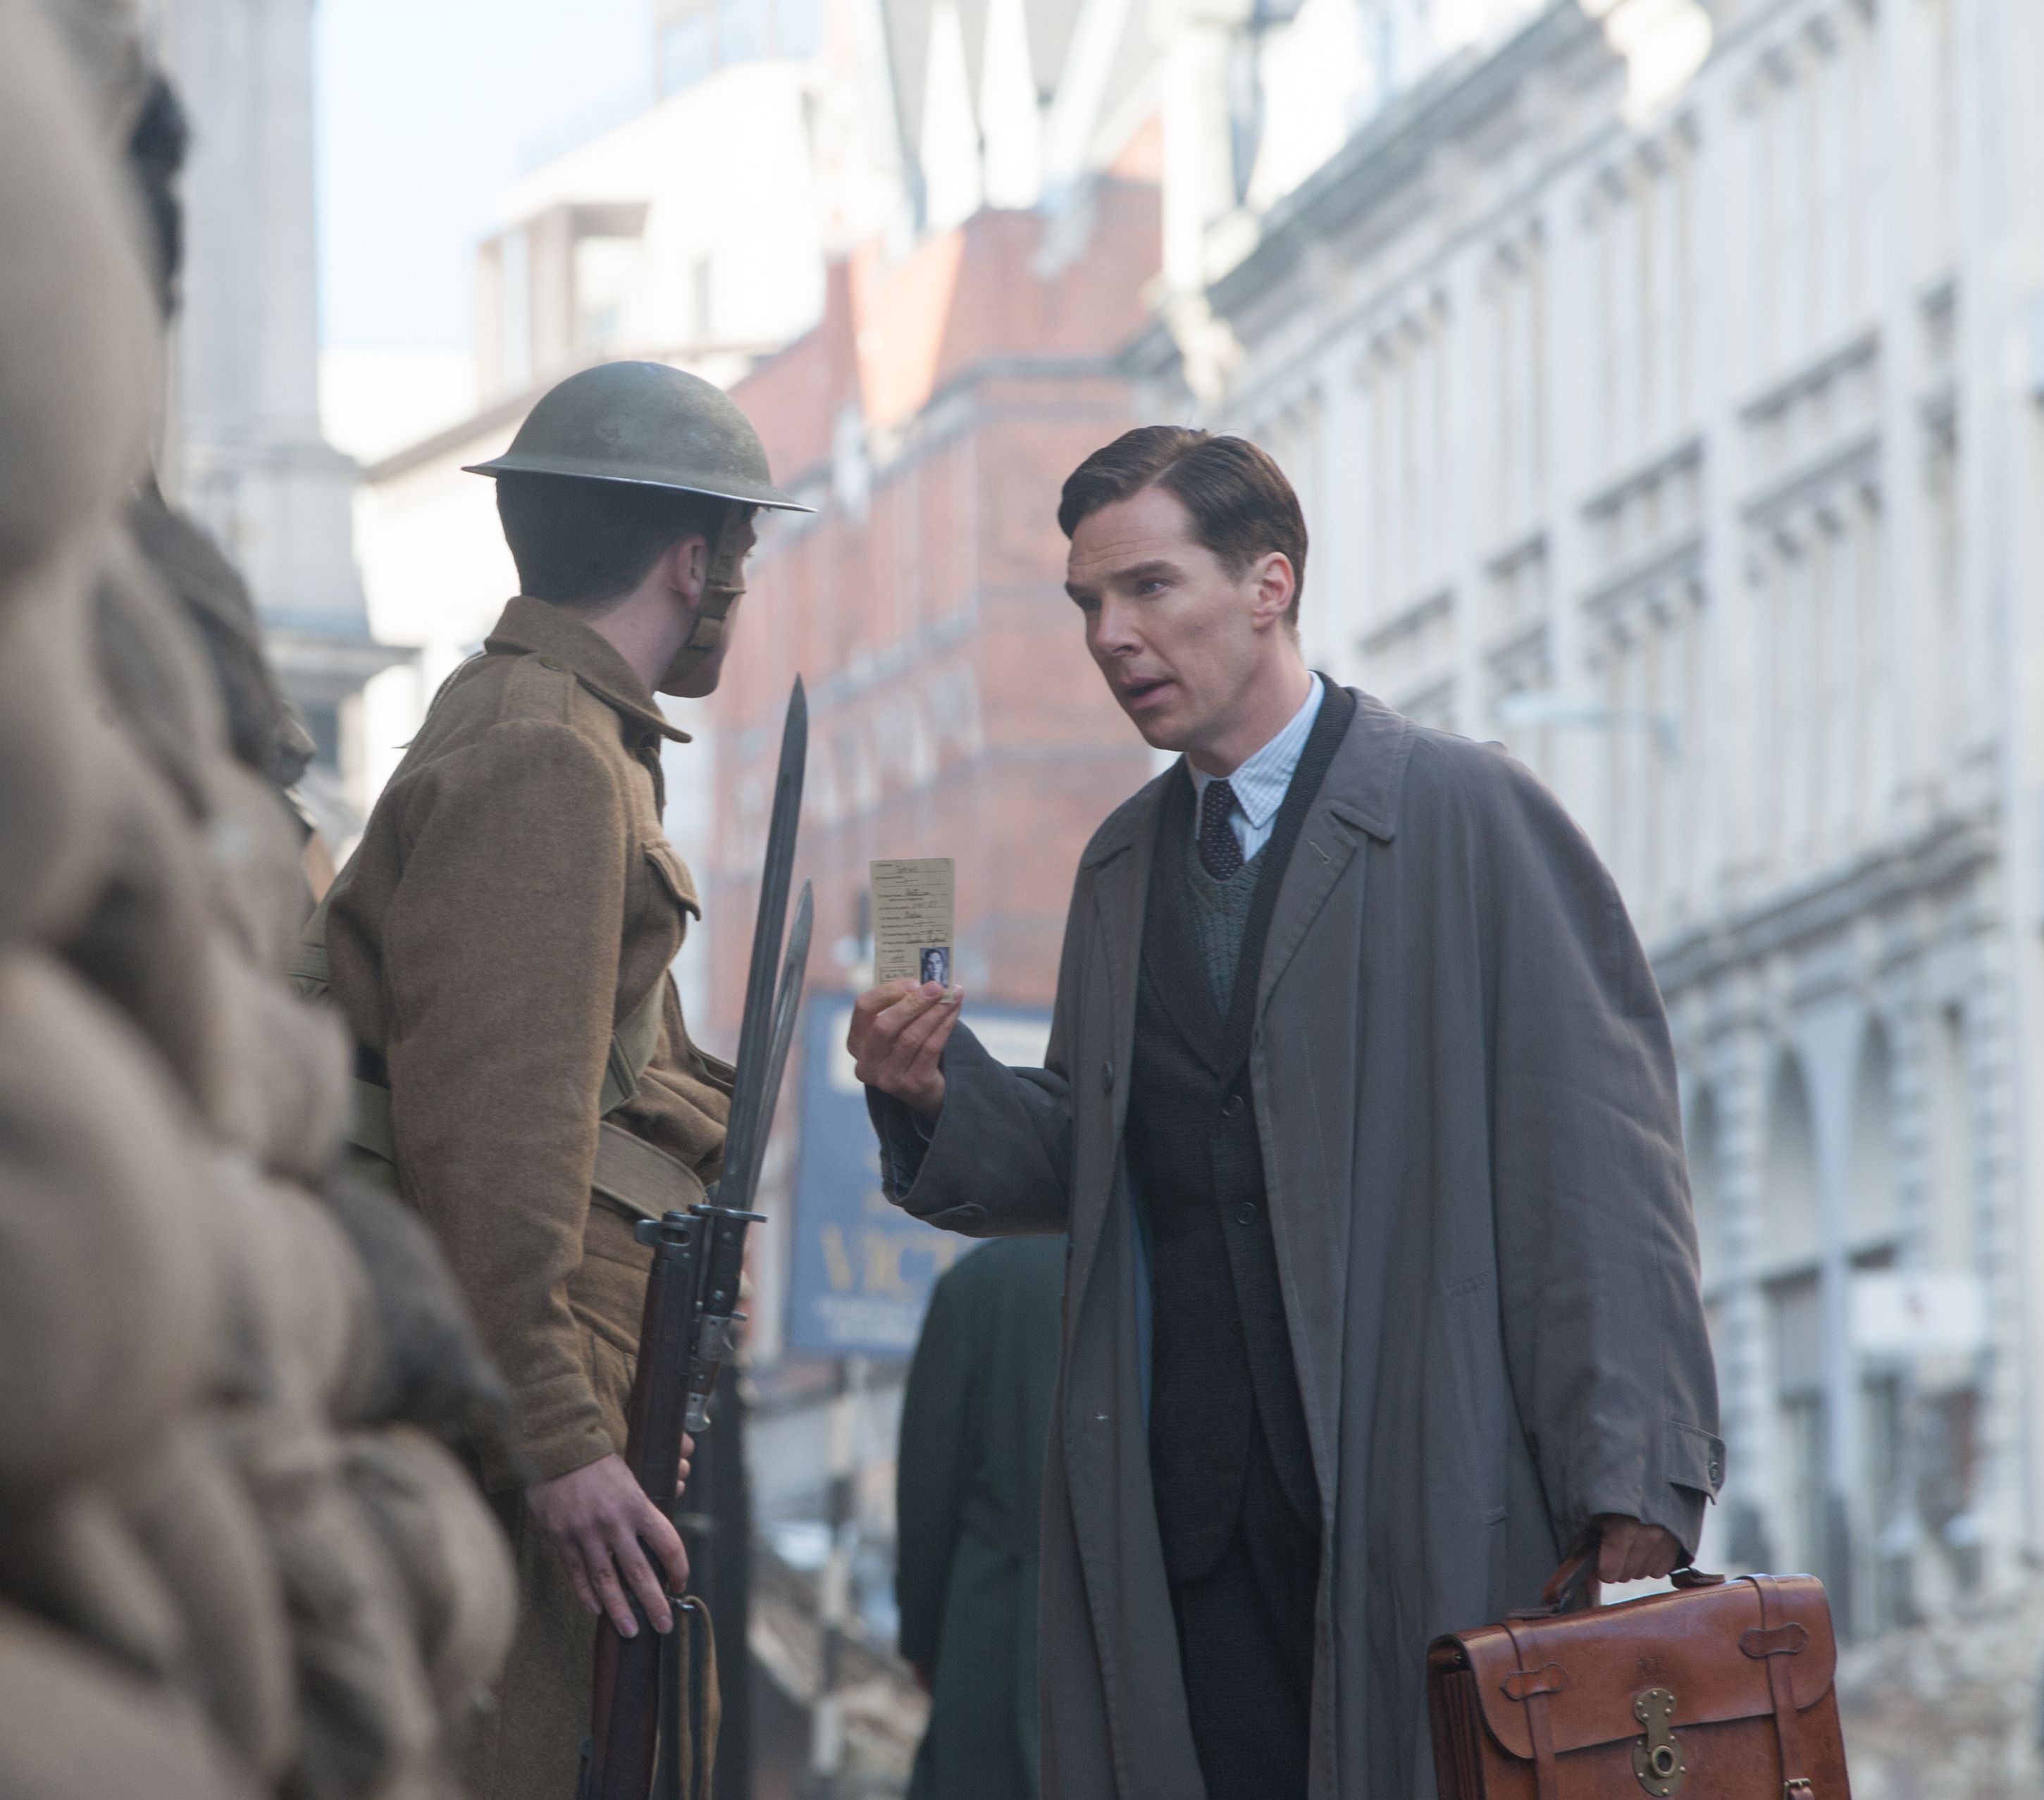 Benedict Cumberbatch during wartime, The Imitation Game